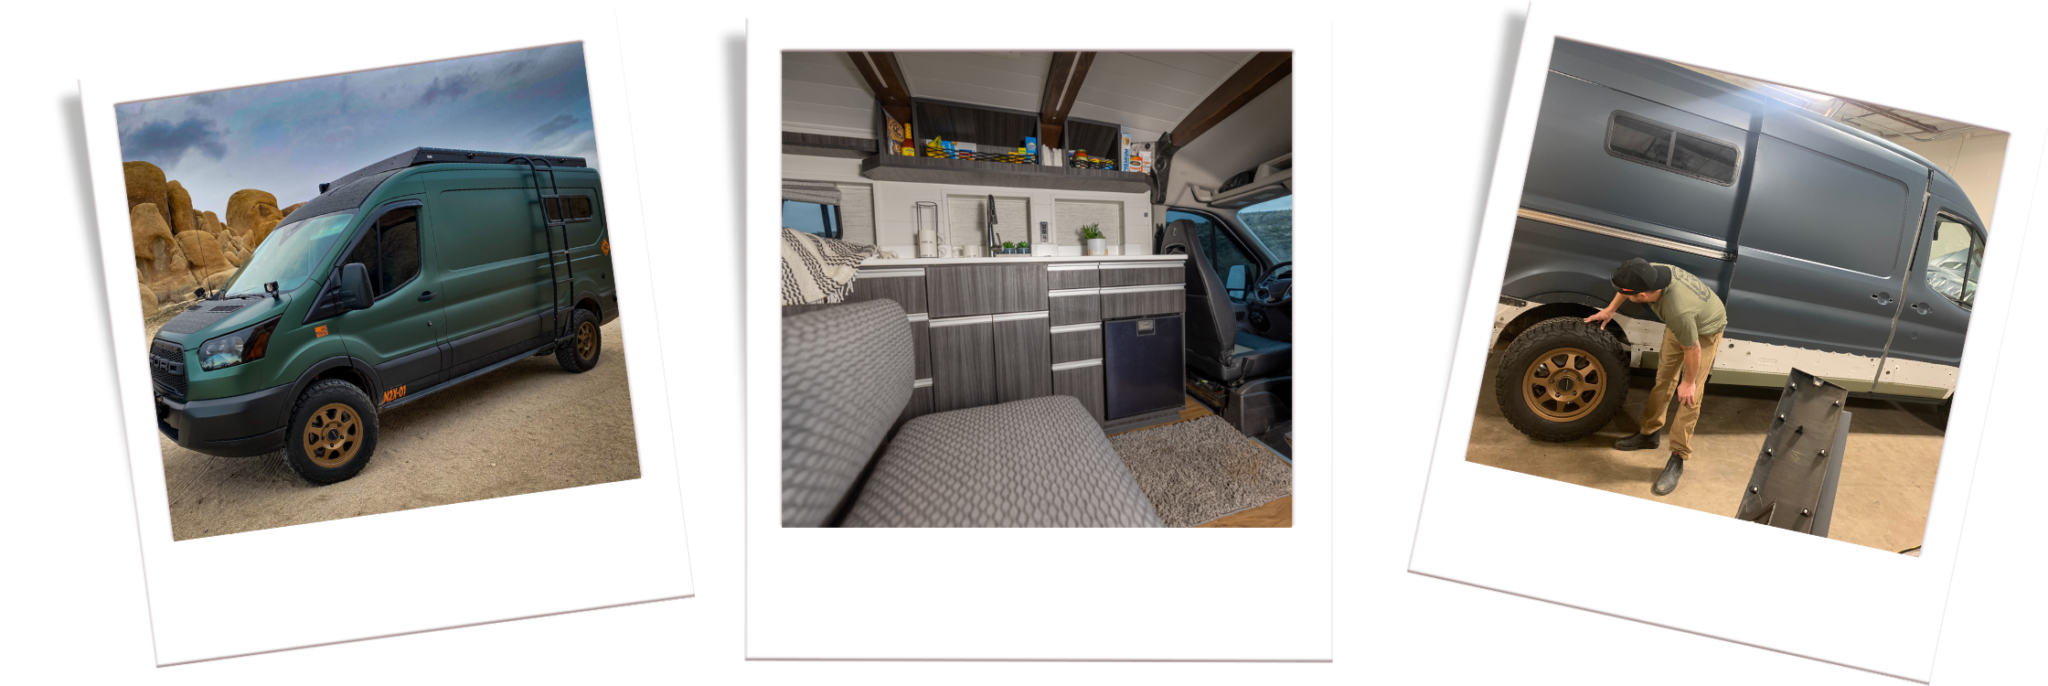 N2 Explore Camper Vans - Inside and Out